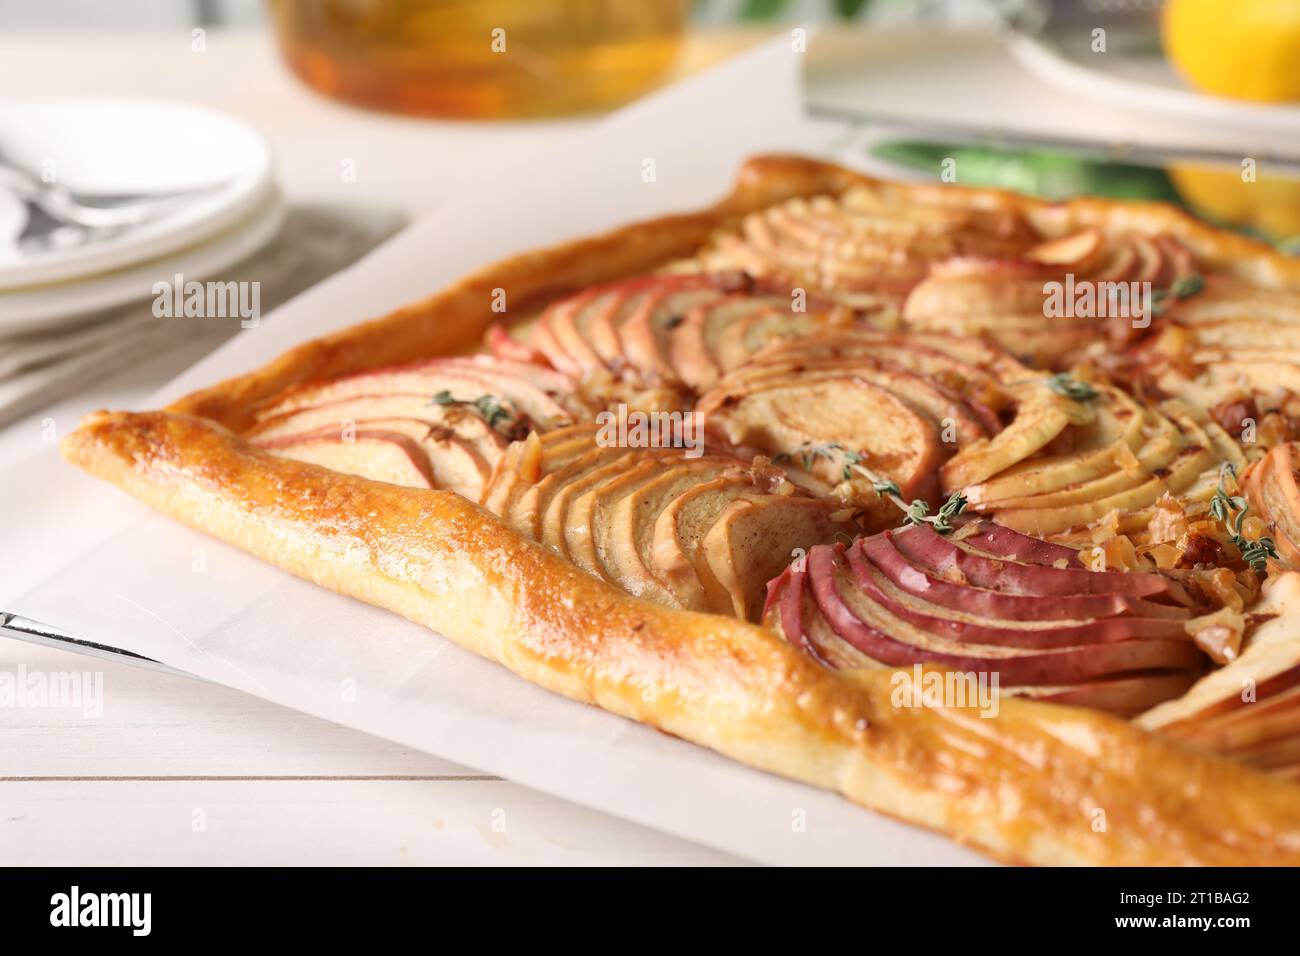 Freshly baked apple pie on white wooden table, closeup Stock Photo